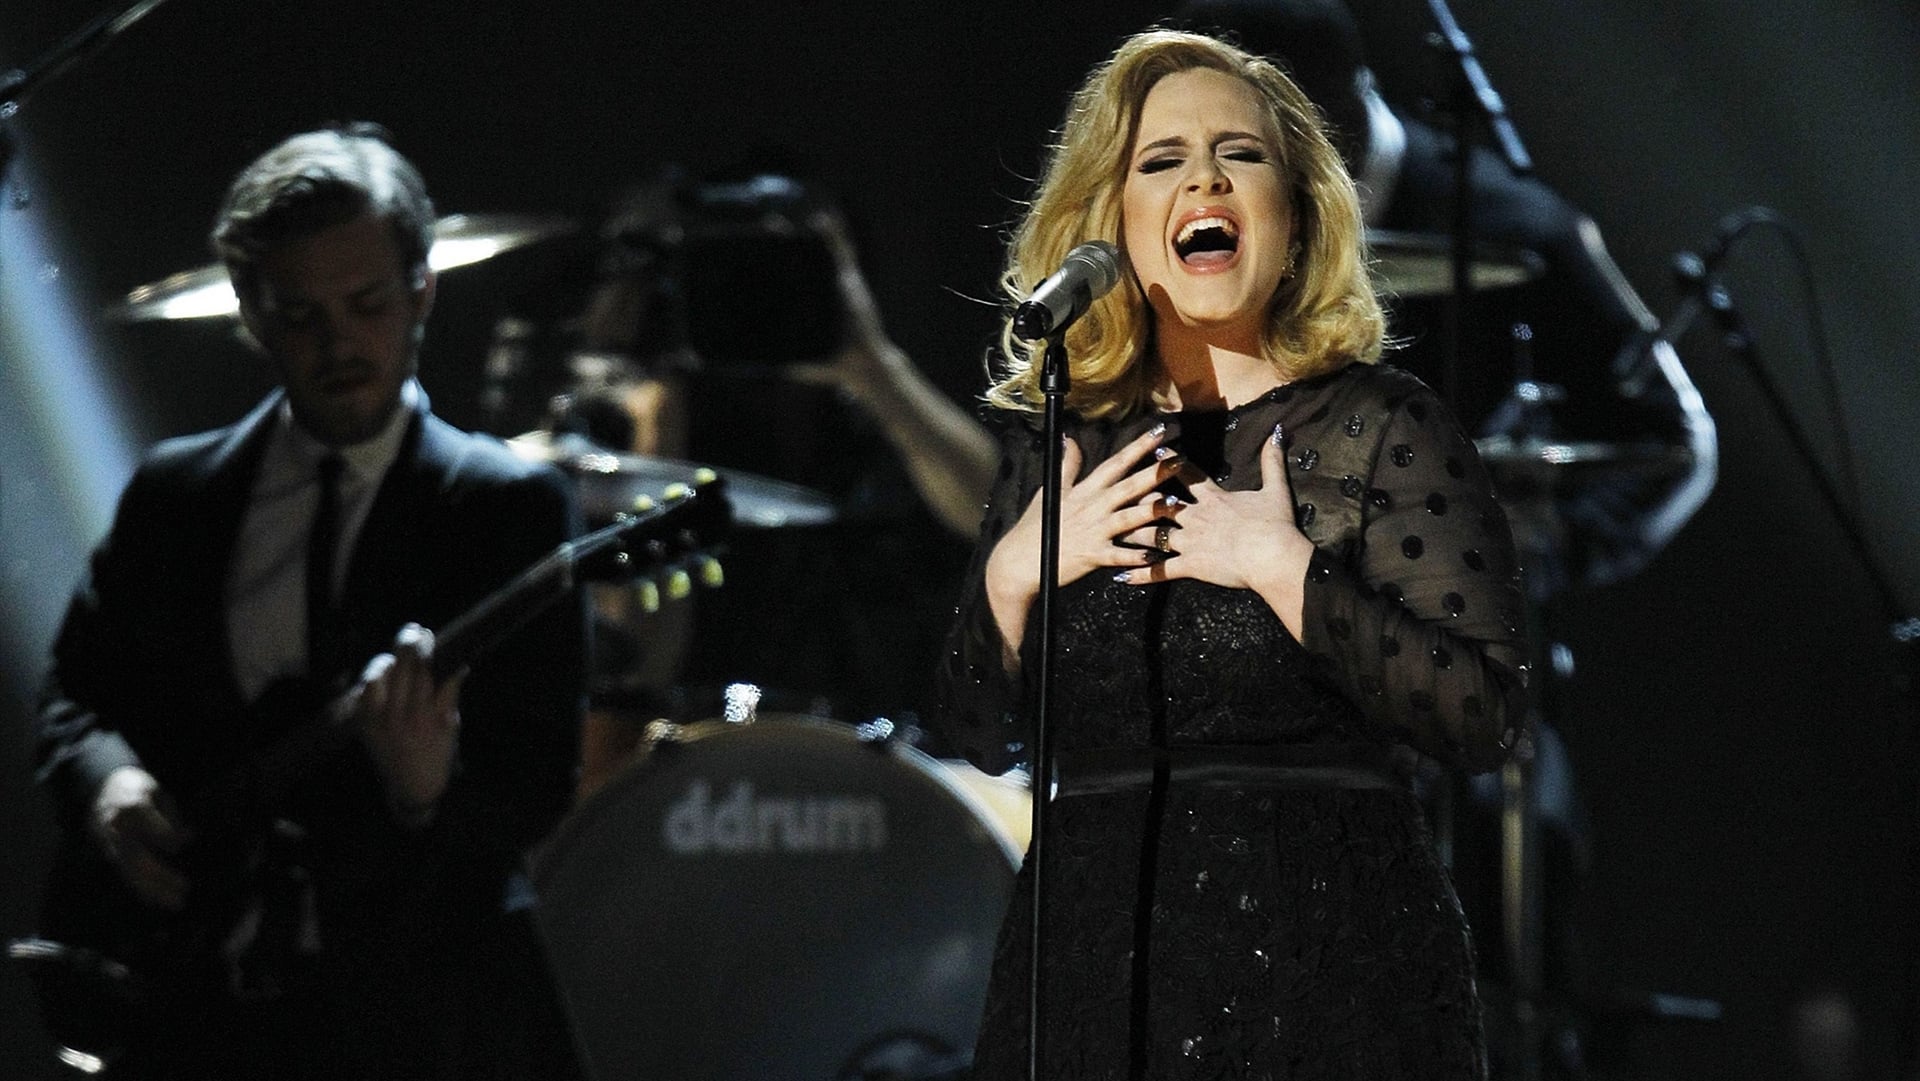 Adele: Live at the Royal Albert Hall